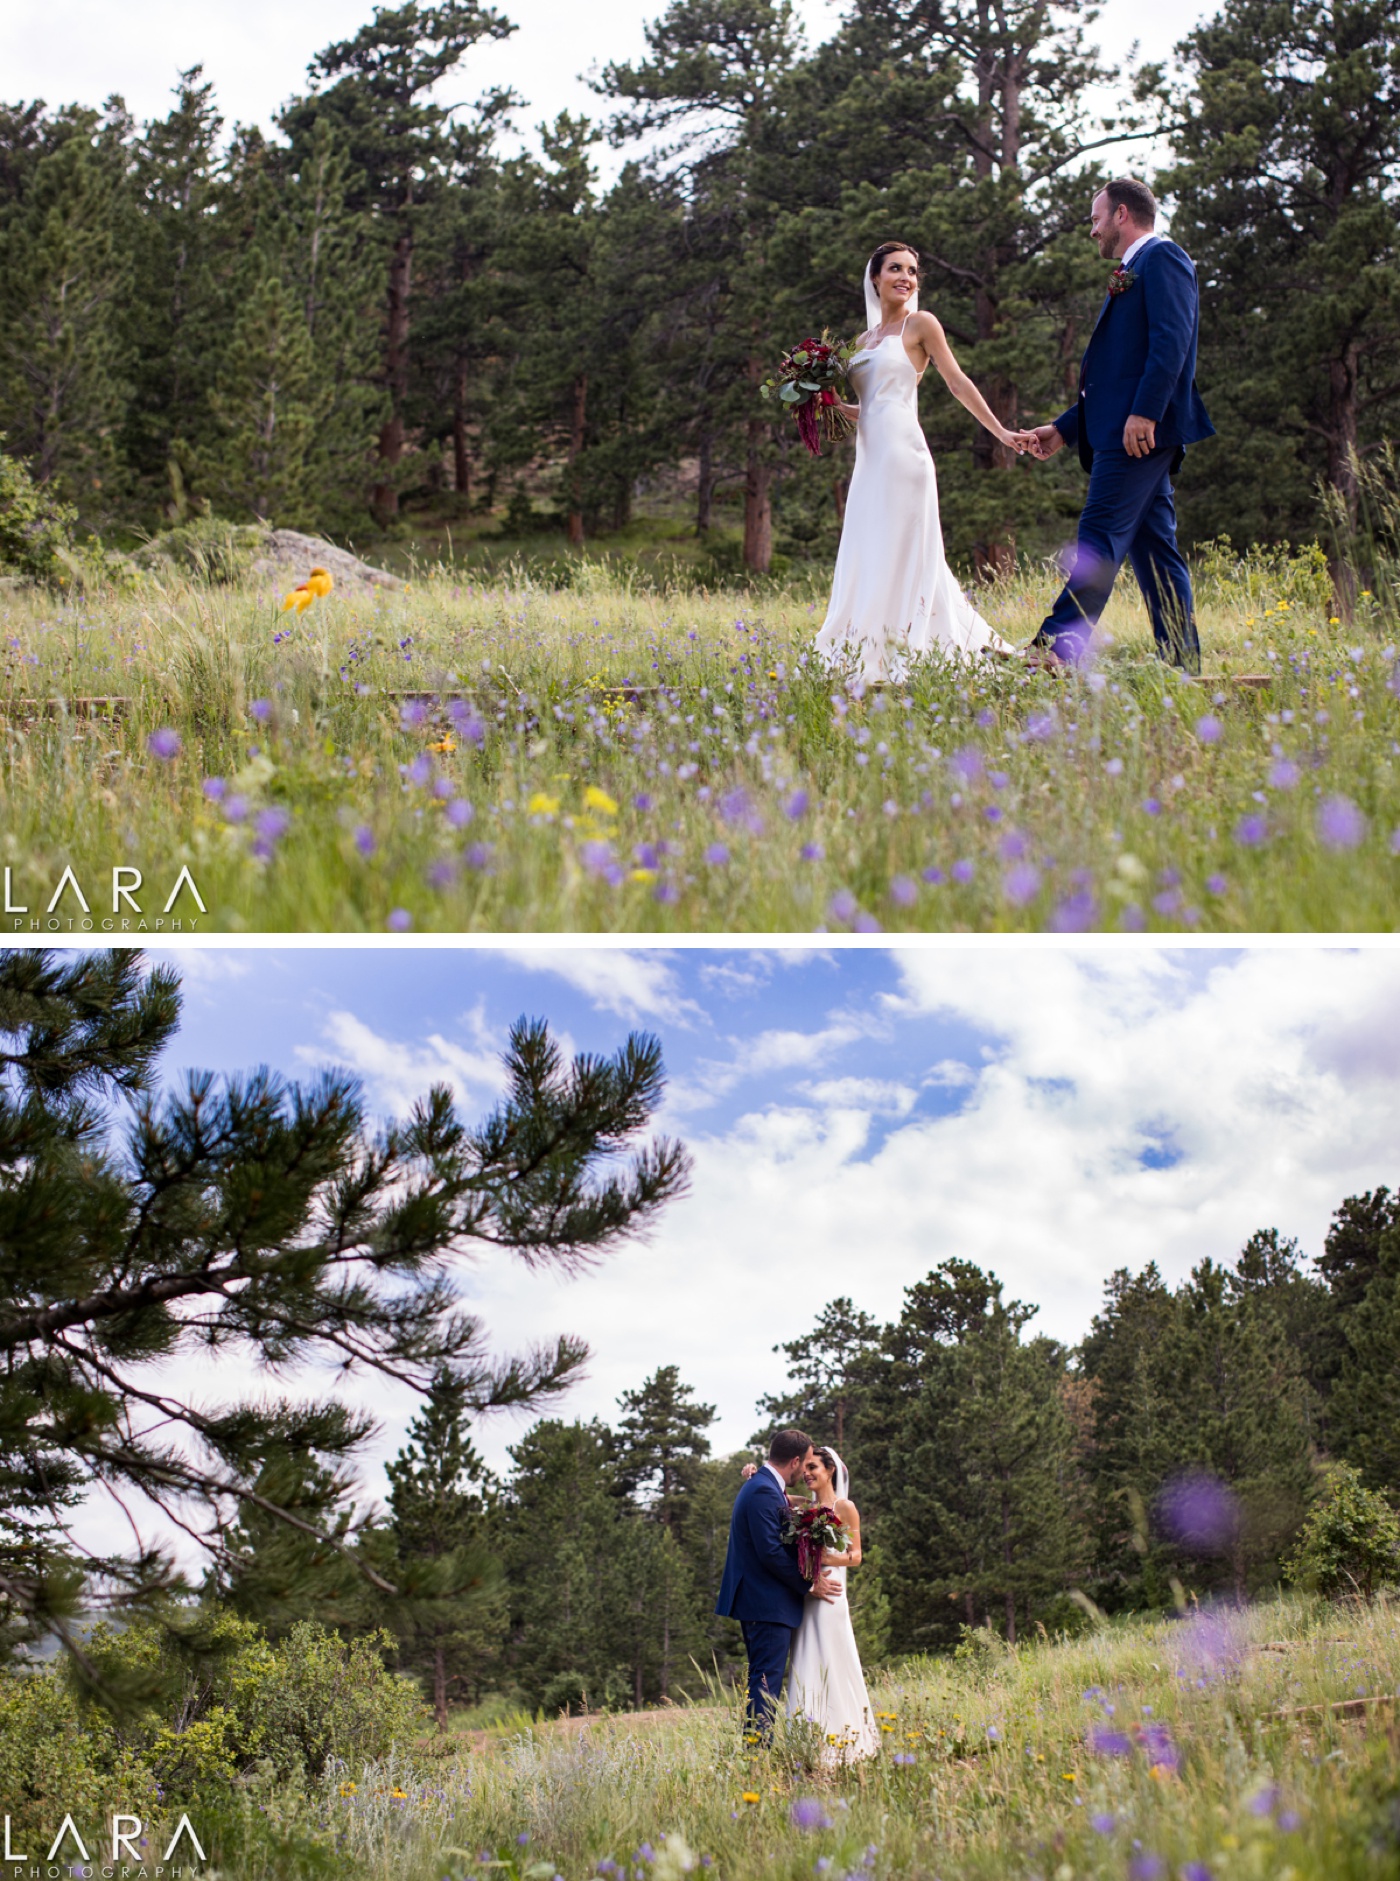 Summer portraits at Taharaa Mountain Lodge, Rustic Wedding in July, Summer Events Colorado